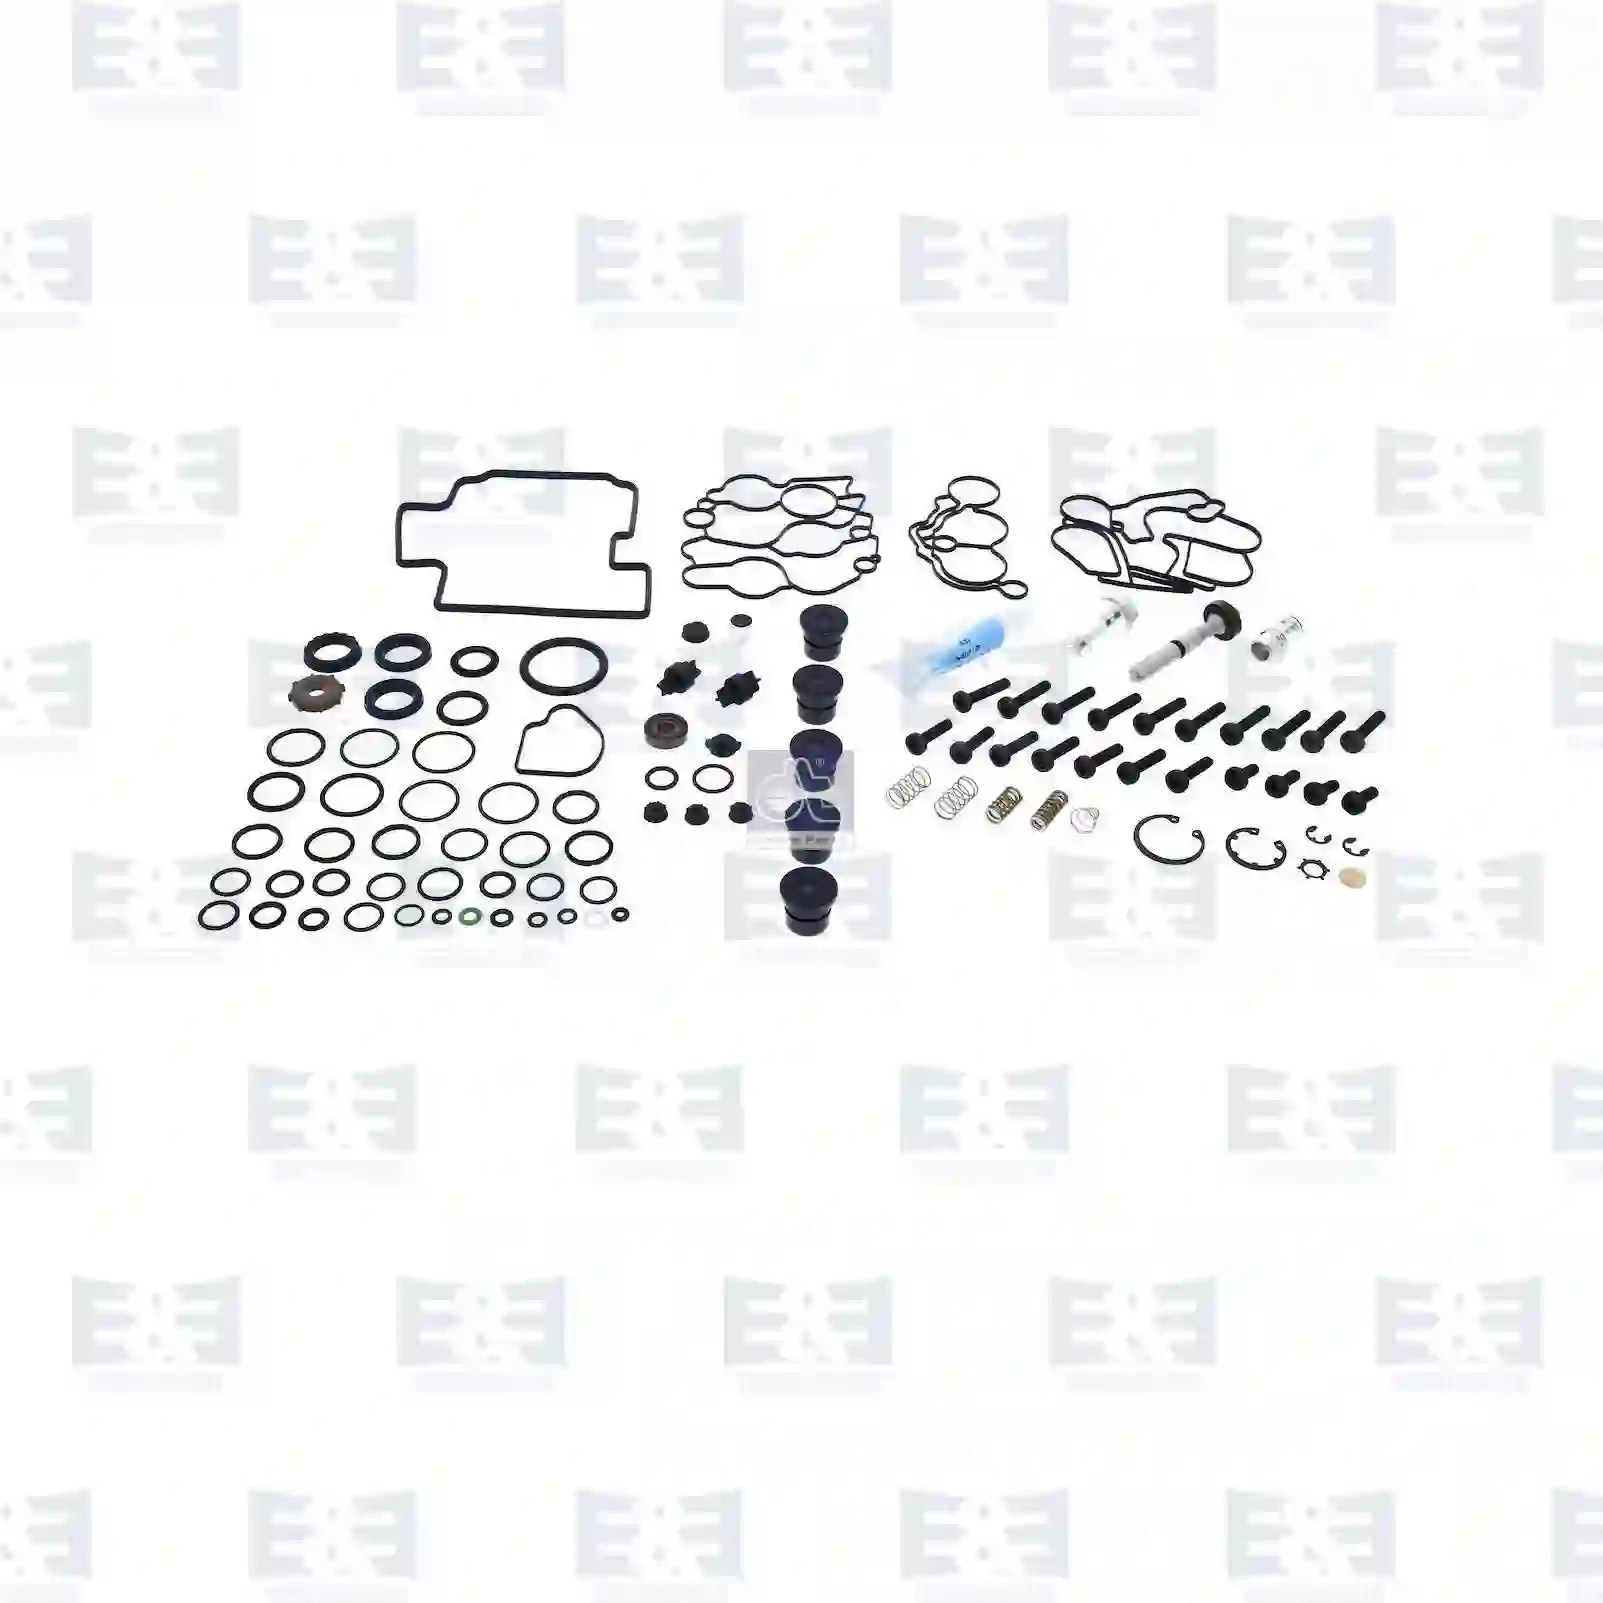 Repair kit, air dryer, 2E2293080, 5001866307S3, 5010457472S3, 5010457873S3, 7421352785S3, 7421743619S3, 7421778549S3, 7421788090S3, 7485003347S3, 7485013162S3, 7485013248S3, 7485013362S3 ||  2E2293080 E&E Truck Spare Parts | Truck Spare Parts, Auotomotive Spare Parts Repair kit, air dryer, 2E2293080, 5001866307S3, 5010457472S3, 5010457873S3, 7421352785S3, 7421743619S3, 7421778549S3, 7421788090S3, 7485003347S3, 7485013162S3, 7485013248S3, 7485013362S3 ||  2E2293080 E&E Truck Spare Parts | Truck Spare Parts, Auotomotive Spare Parts